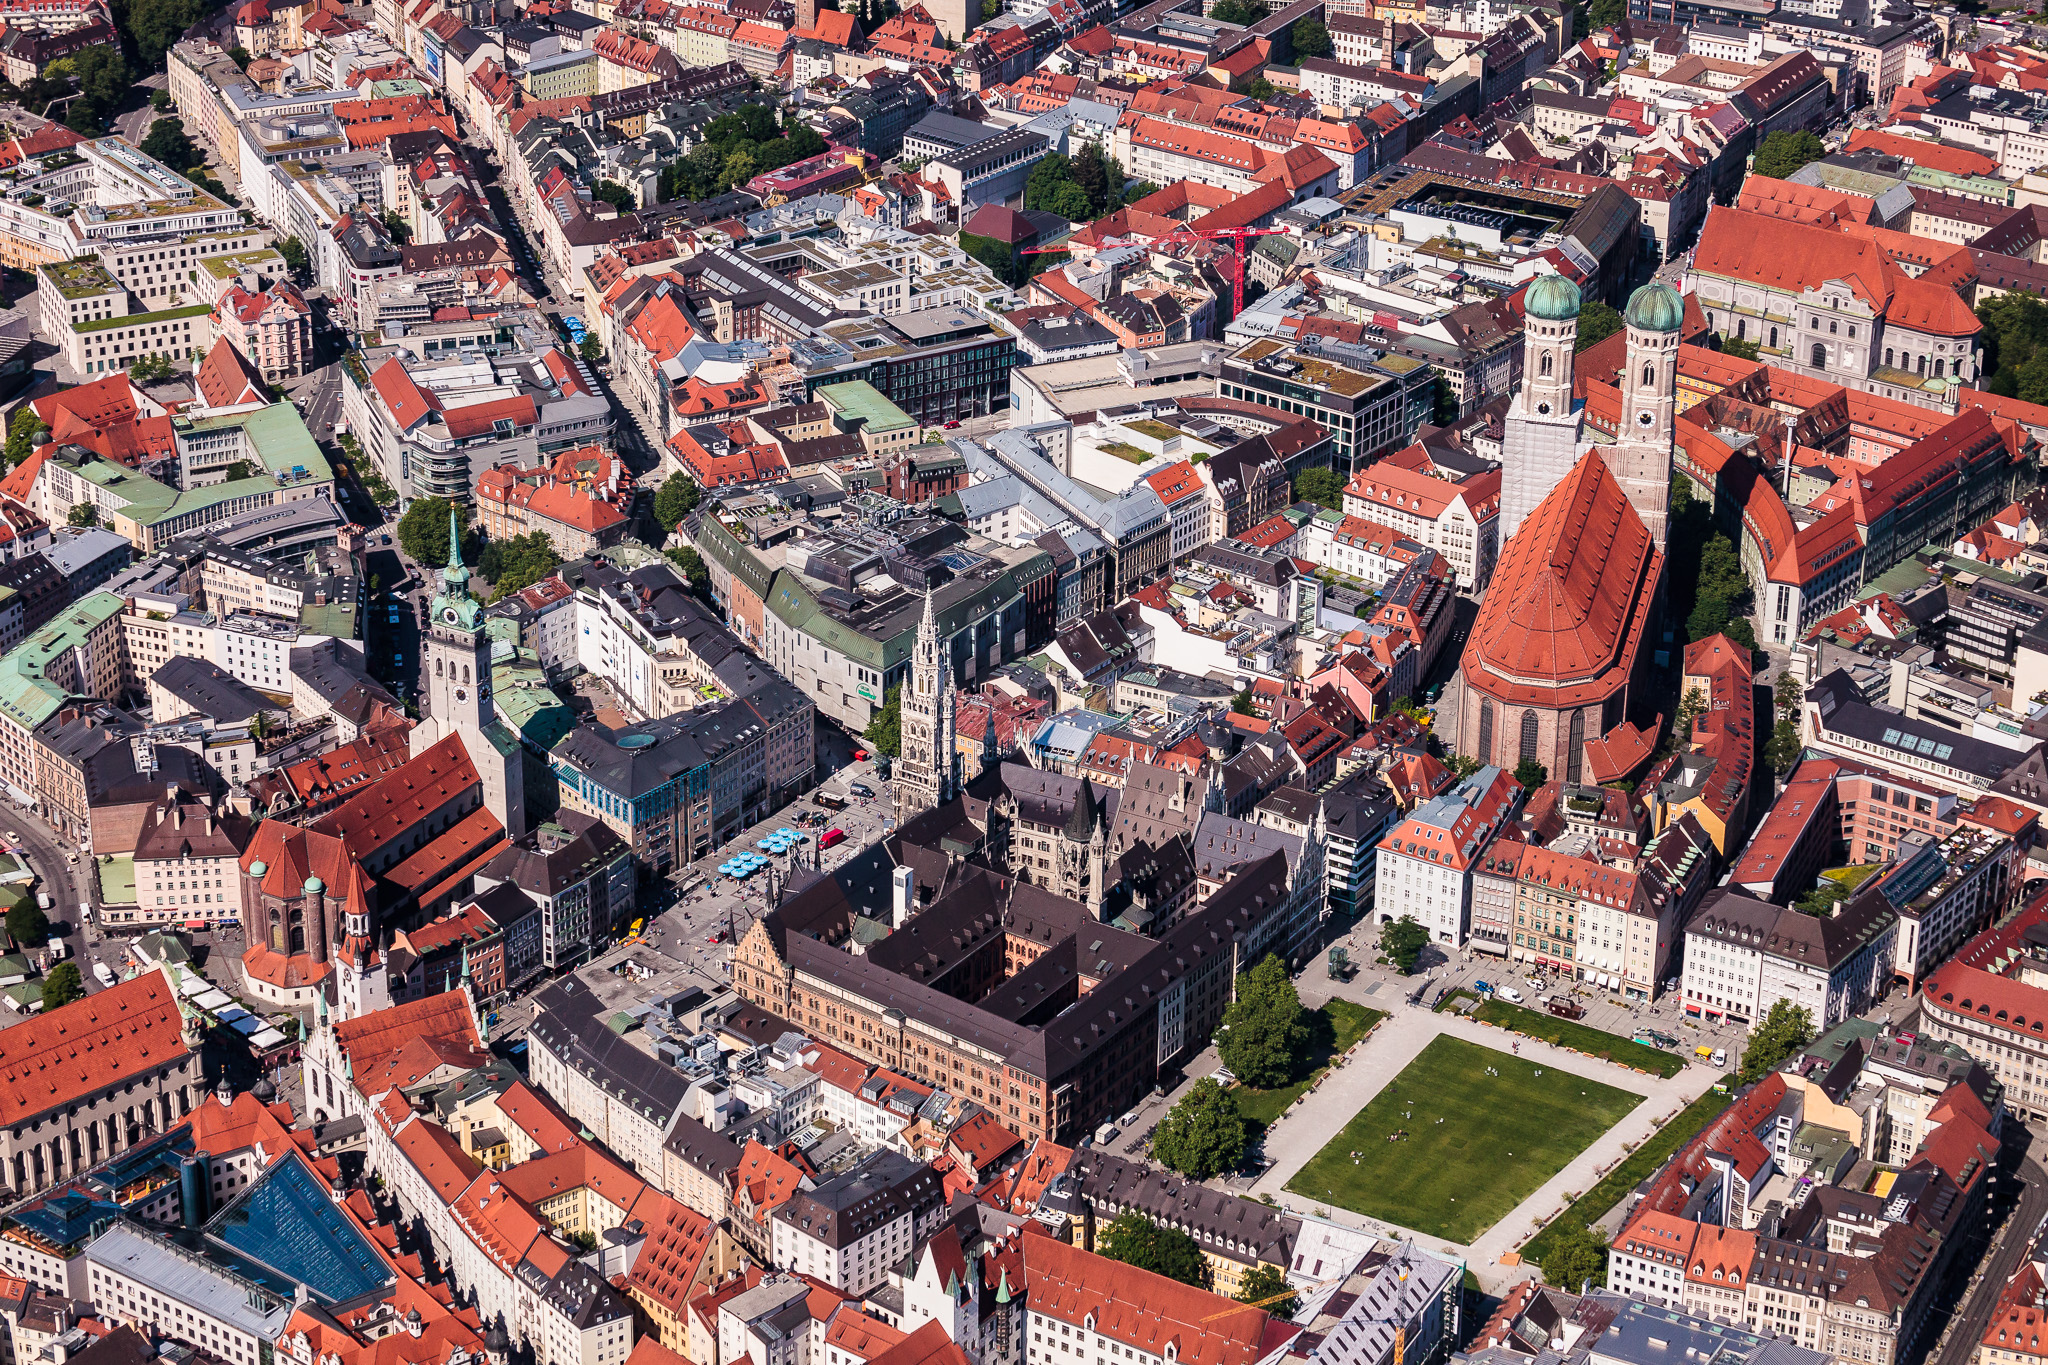 Luftaufnahmen Altstadt München, Frauenkirche, Rathaus, Alter Peter, St. Peter